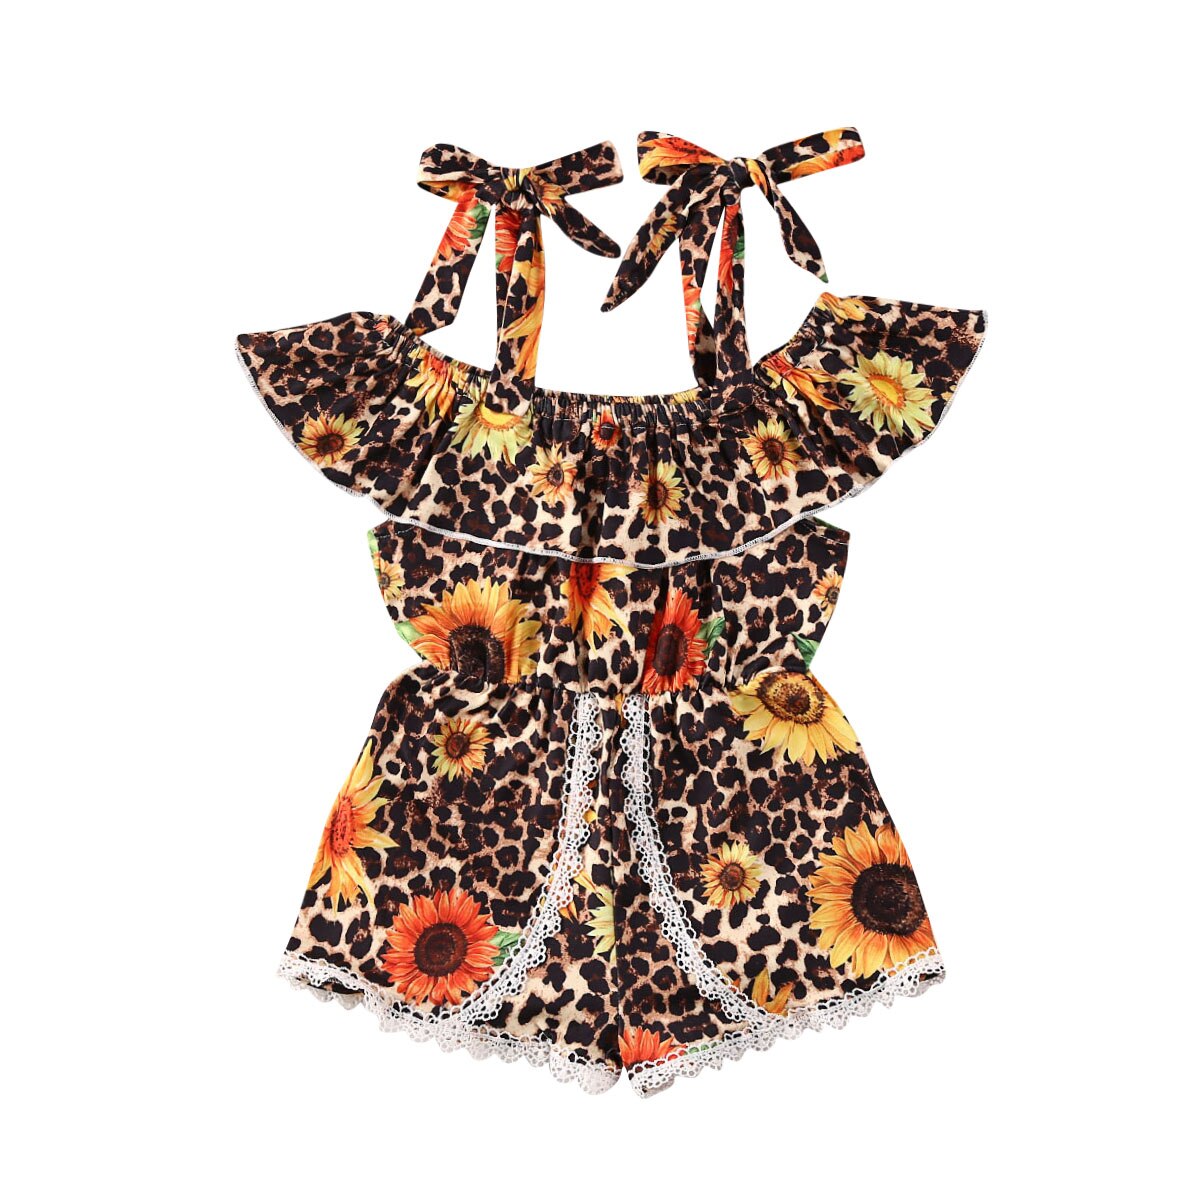 Imcute Brand Summer Toddler Baby Girls Clothes Kid Rompers Sunflower Leopard Print Off Shoulder Tassel Jumpsuits Bib Pants 6M-5Y: 12m